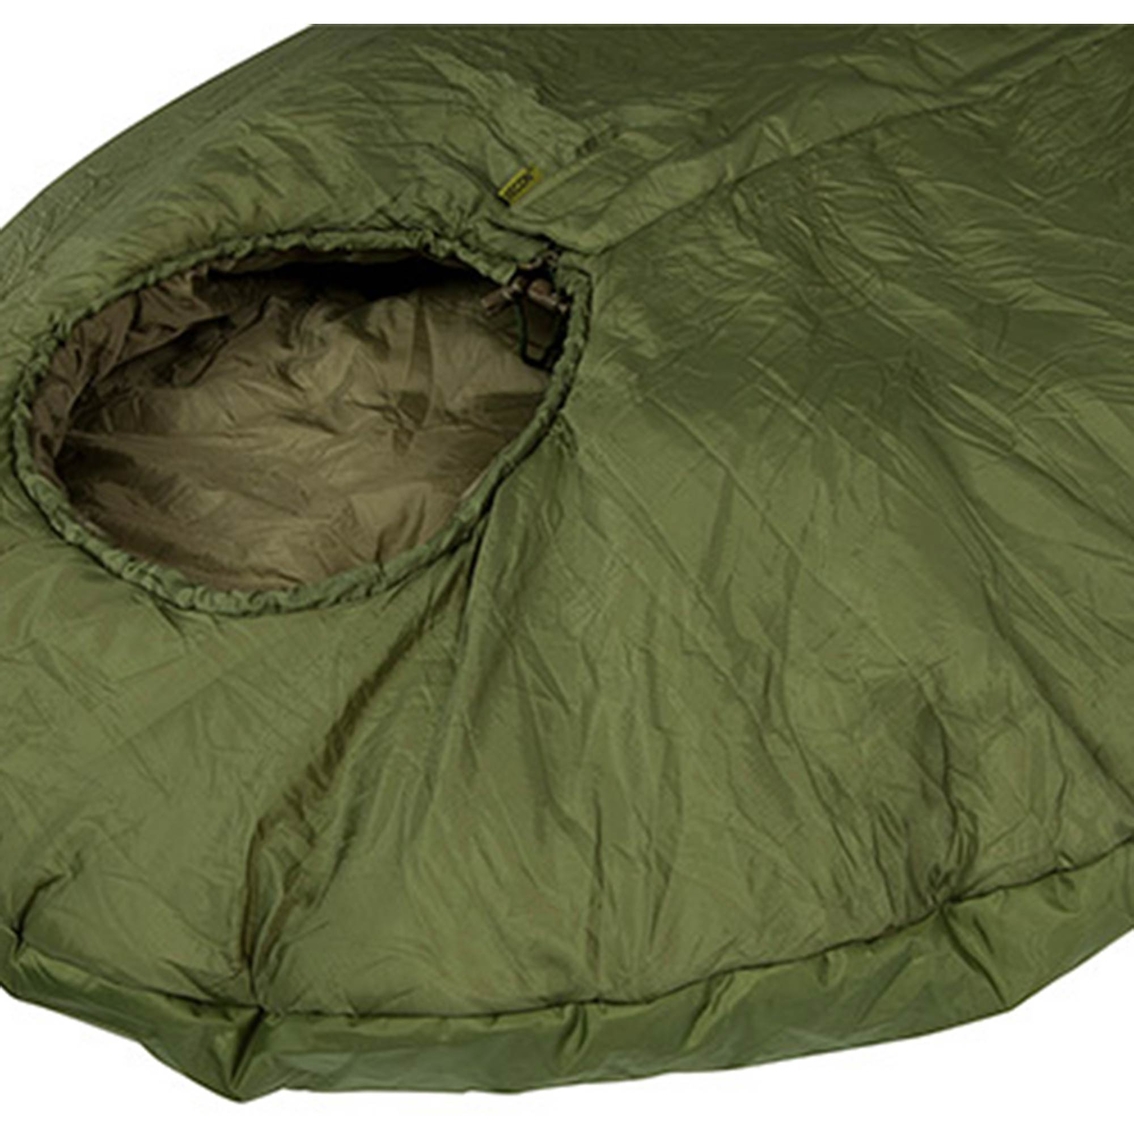 Recon 4 Sleeping Bag | Sleeping Bags & Bedding | Sports & Outdoors ...